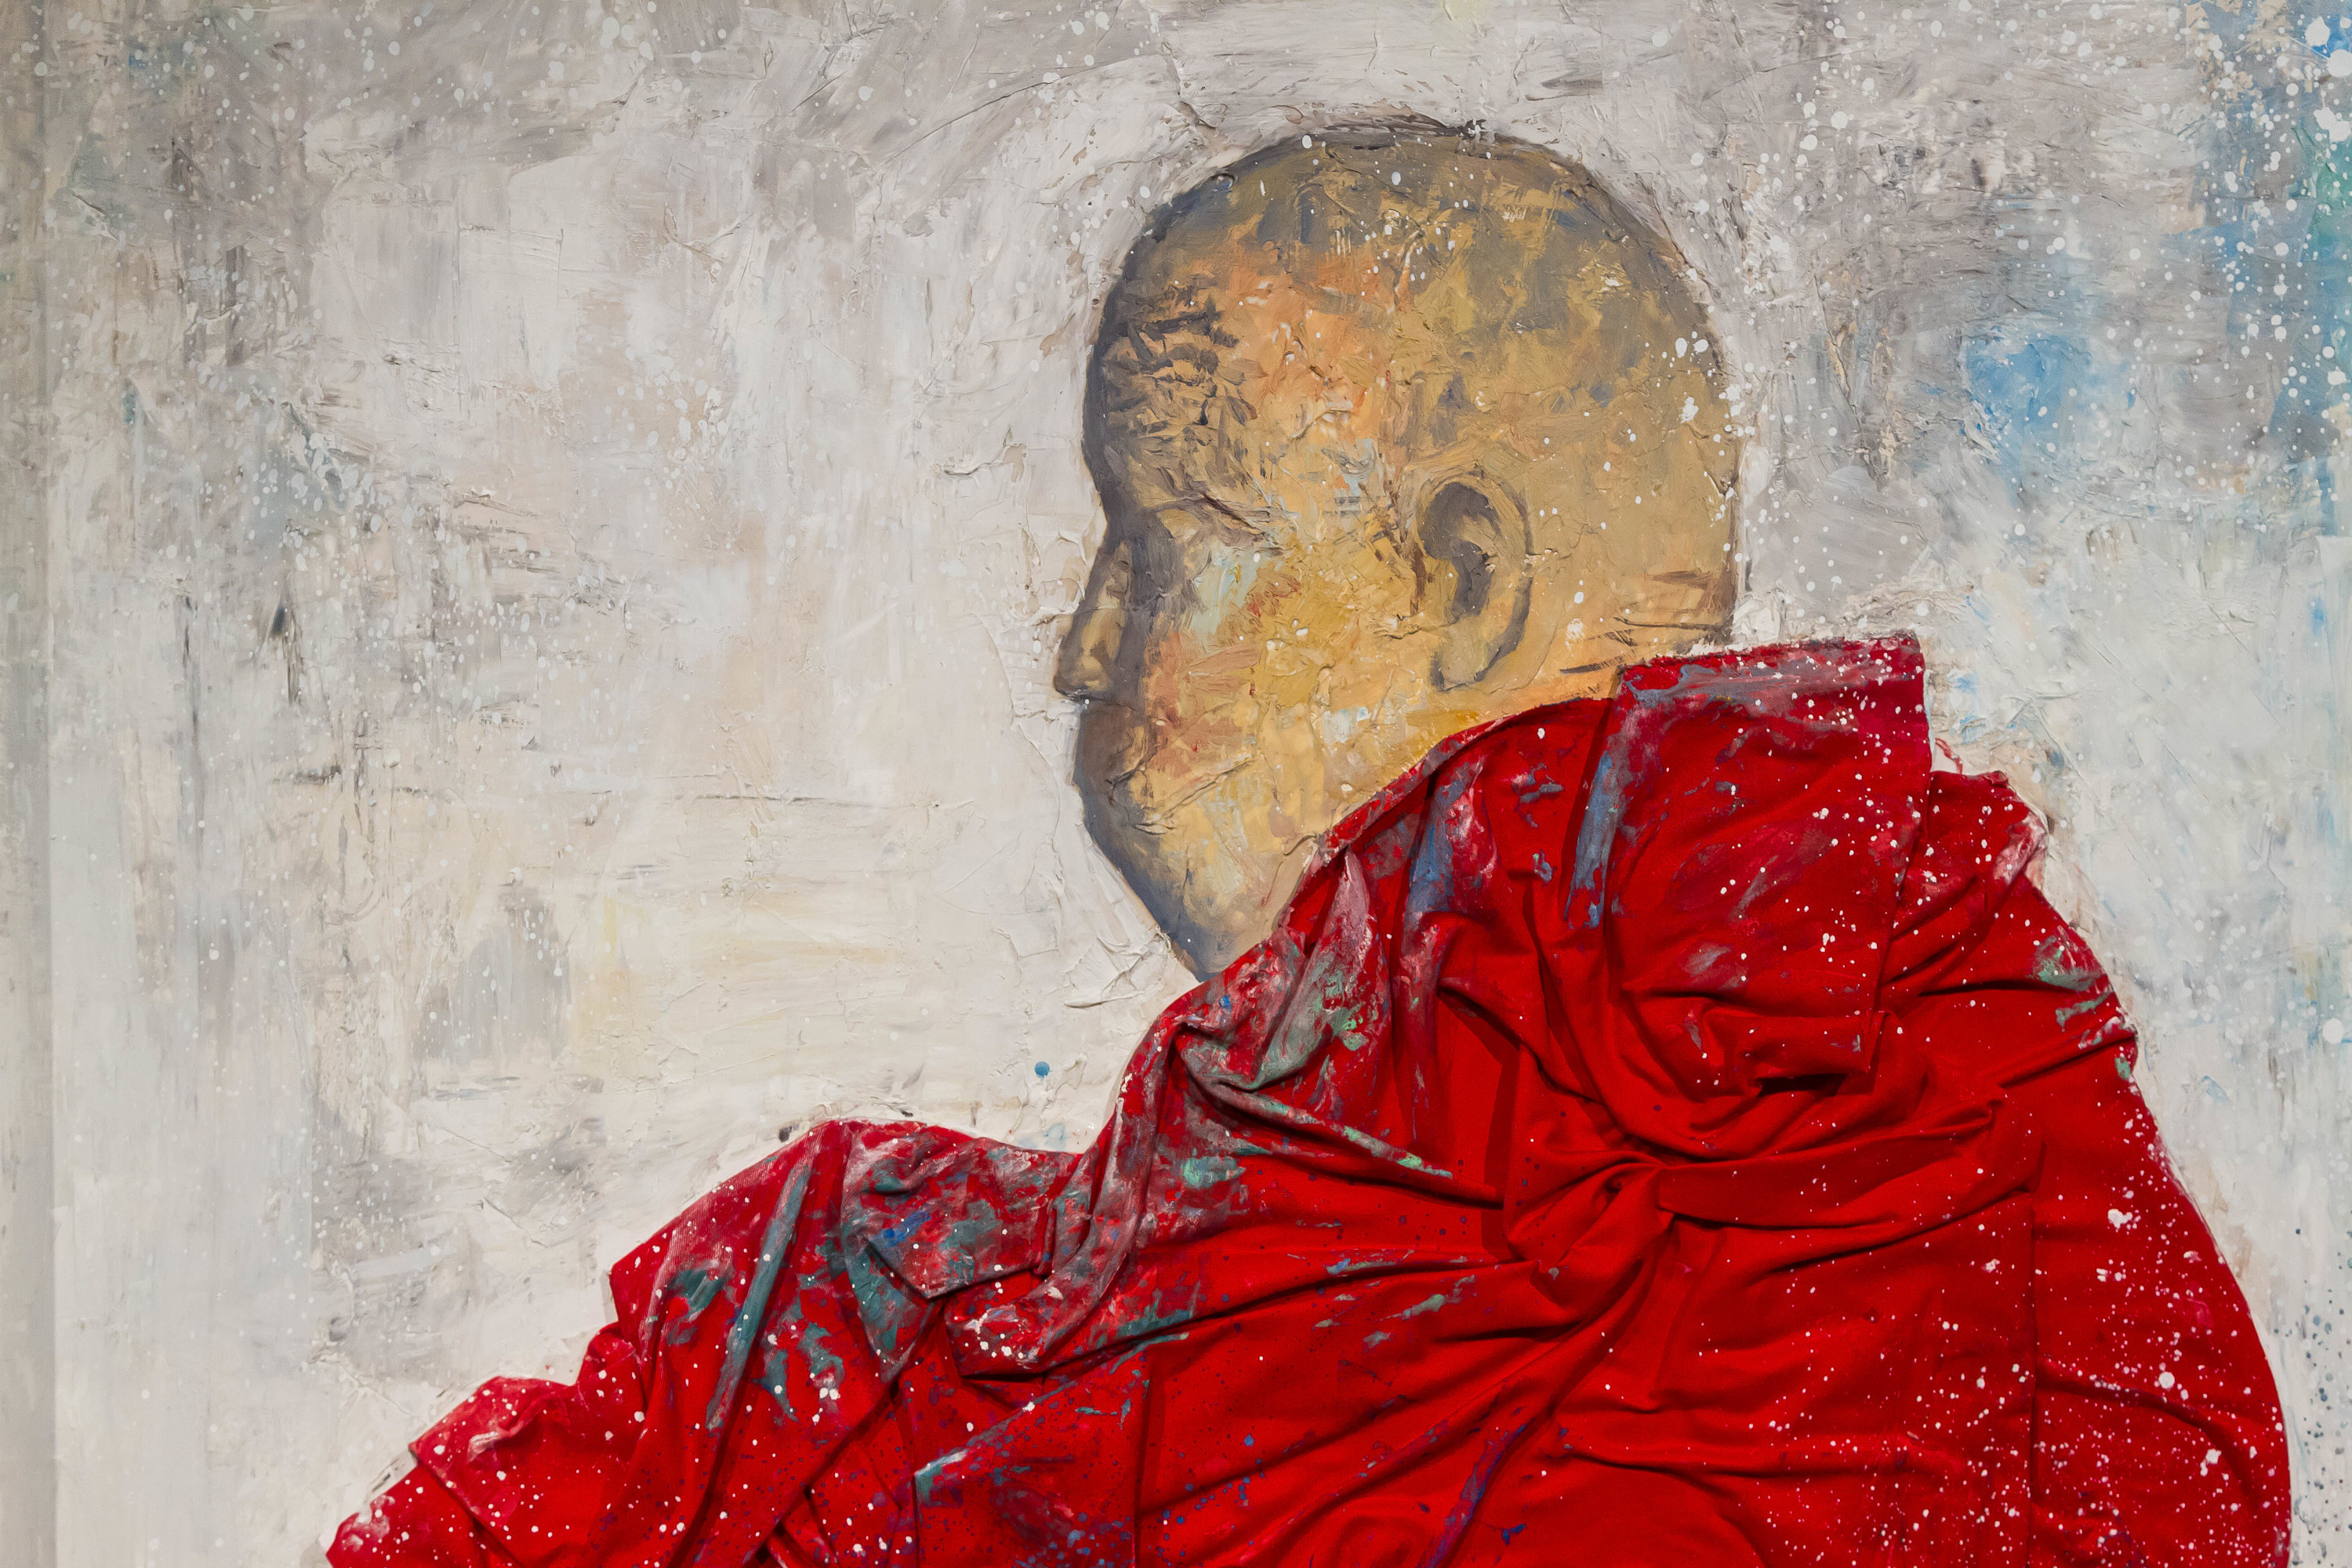 На картине изображен буддийский монах